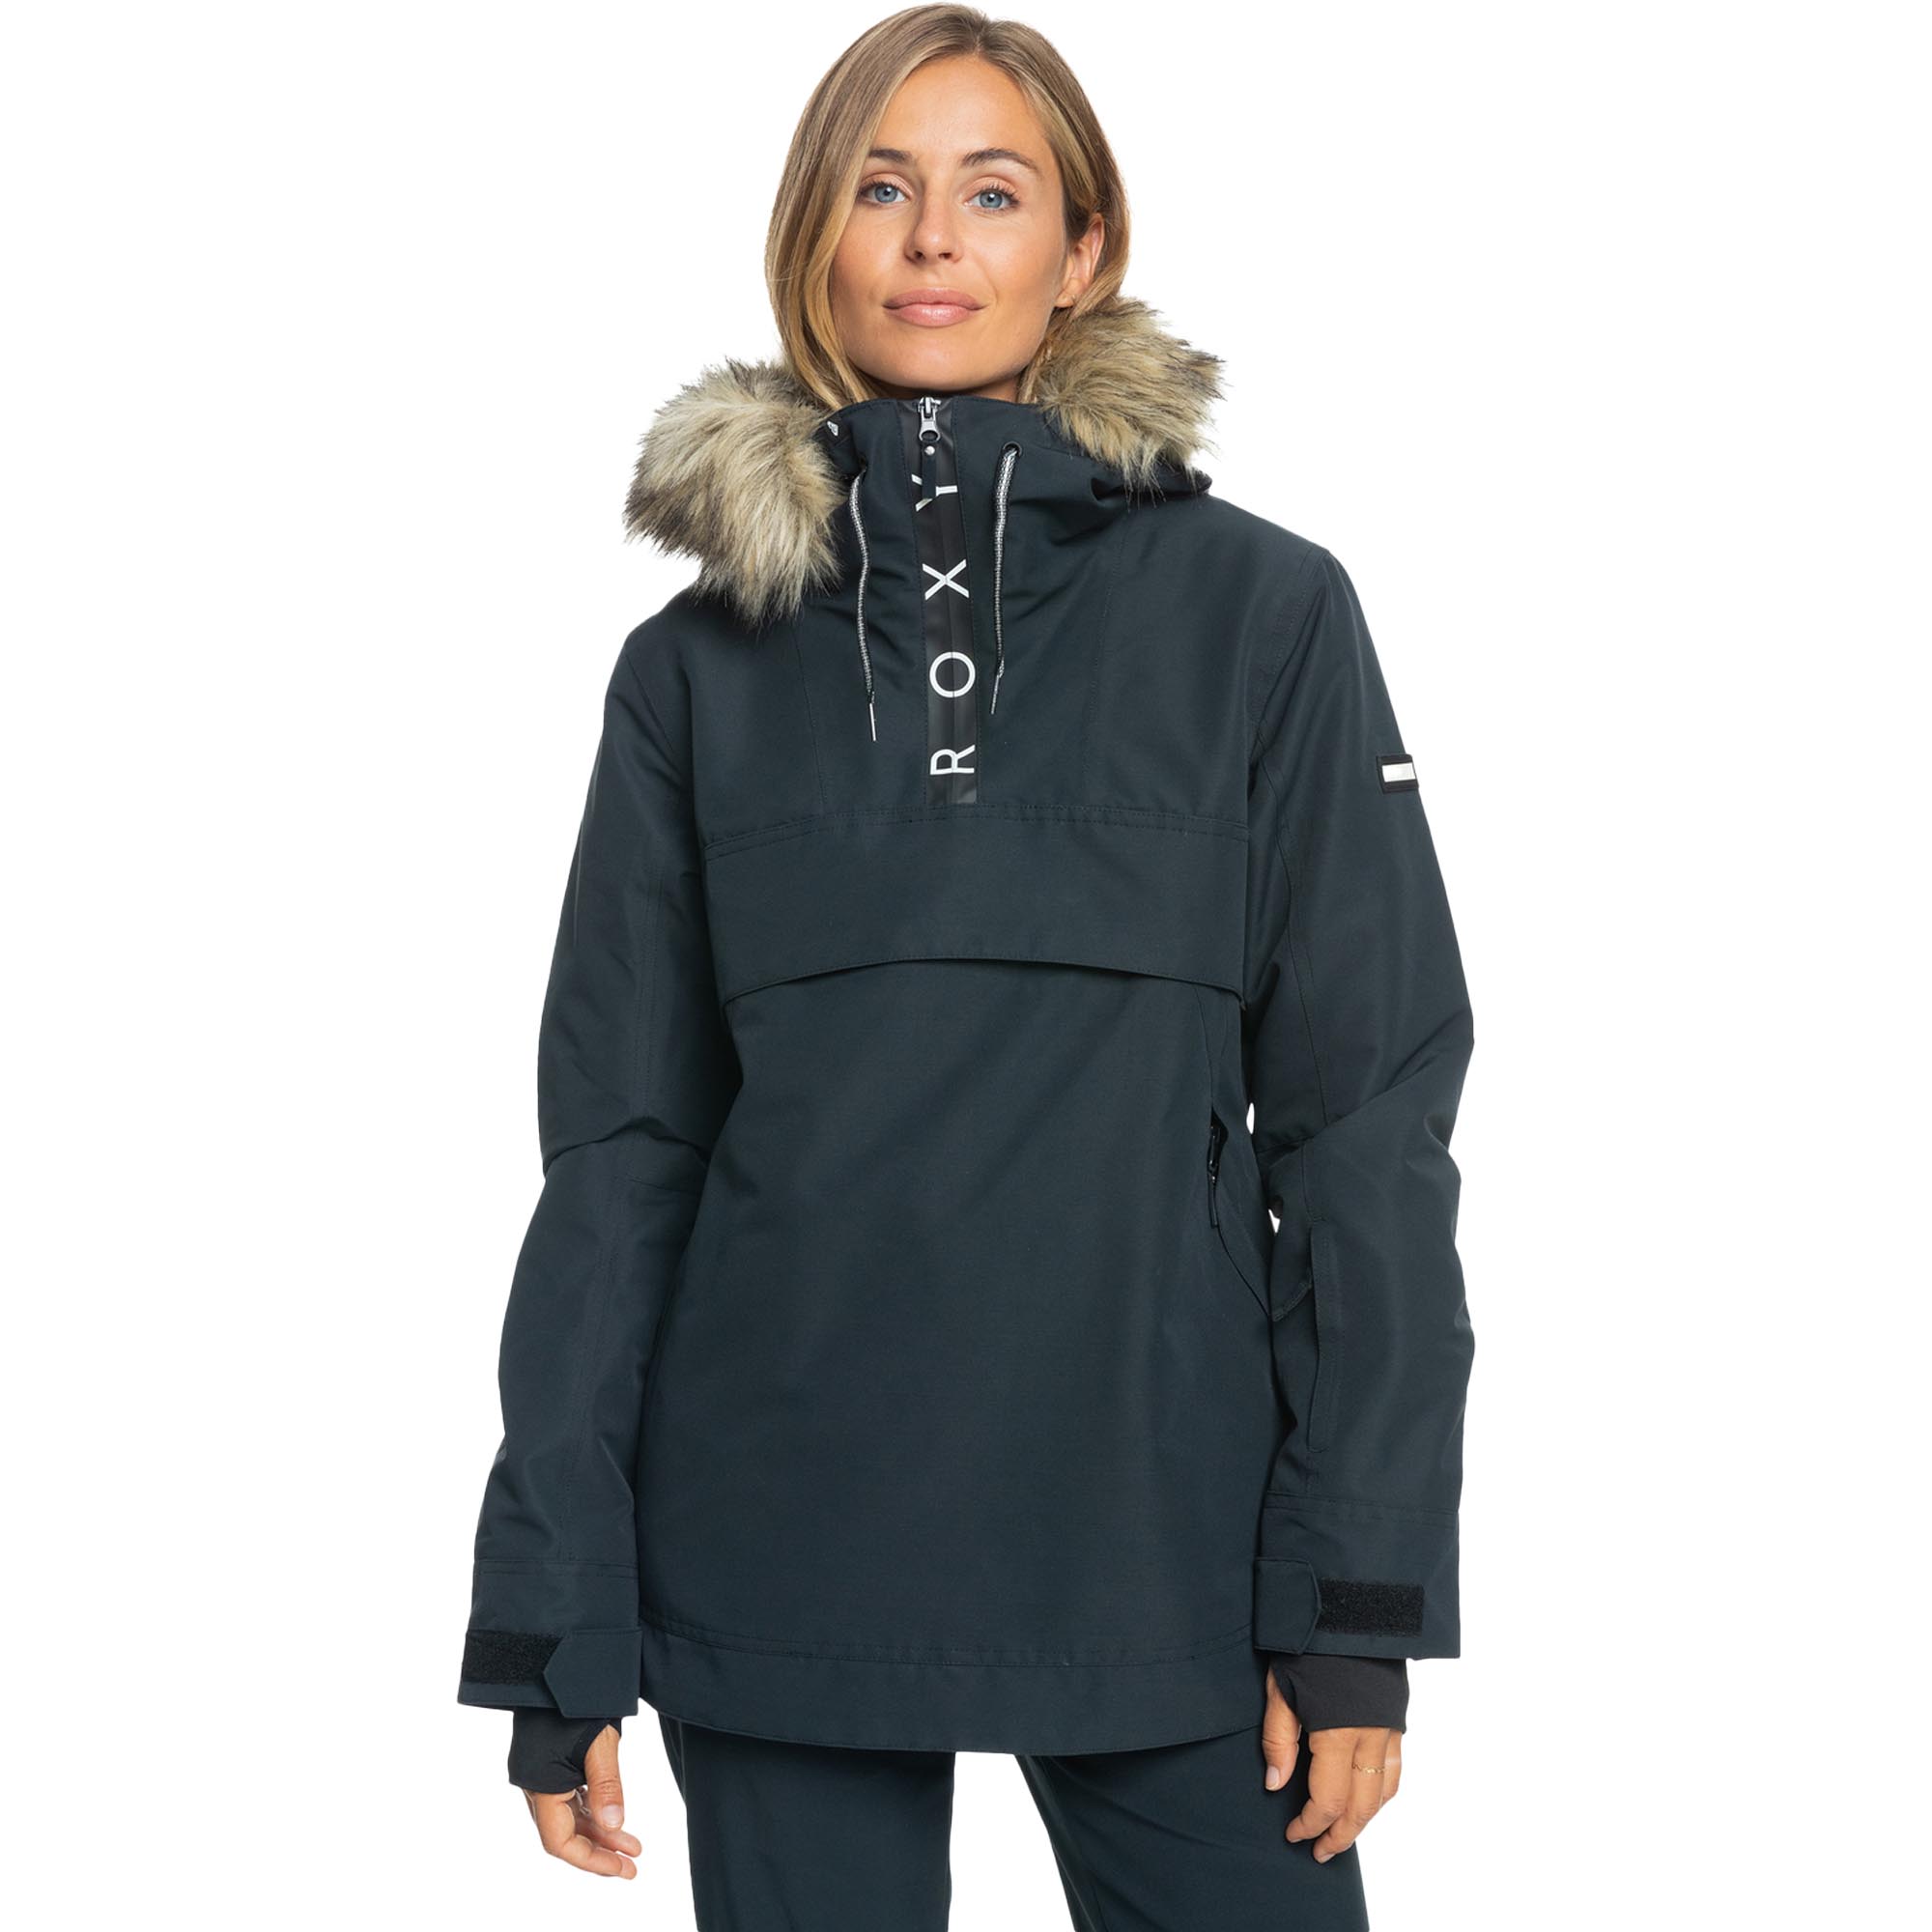 Roxy Women's Shelter Snow Jacket with DryFlight Technology, True